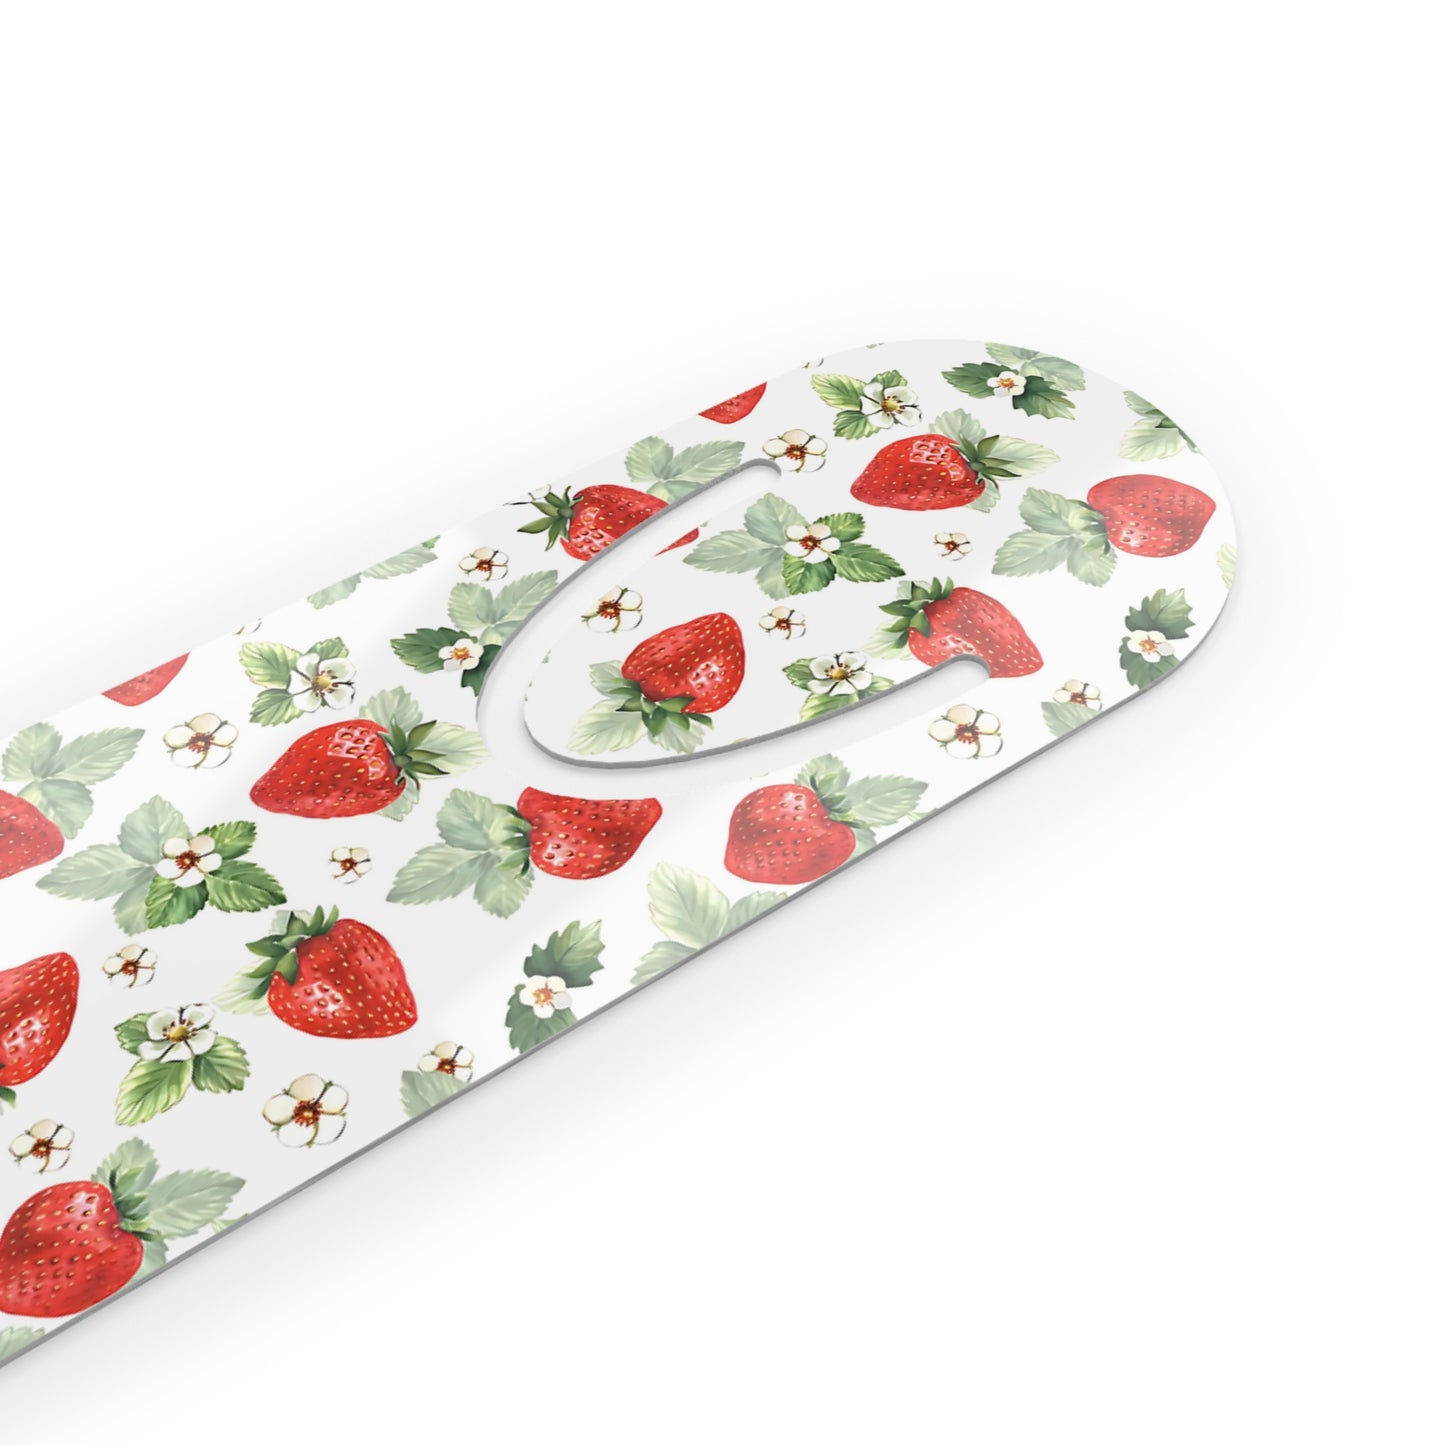 Strawberry Bookmark